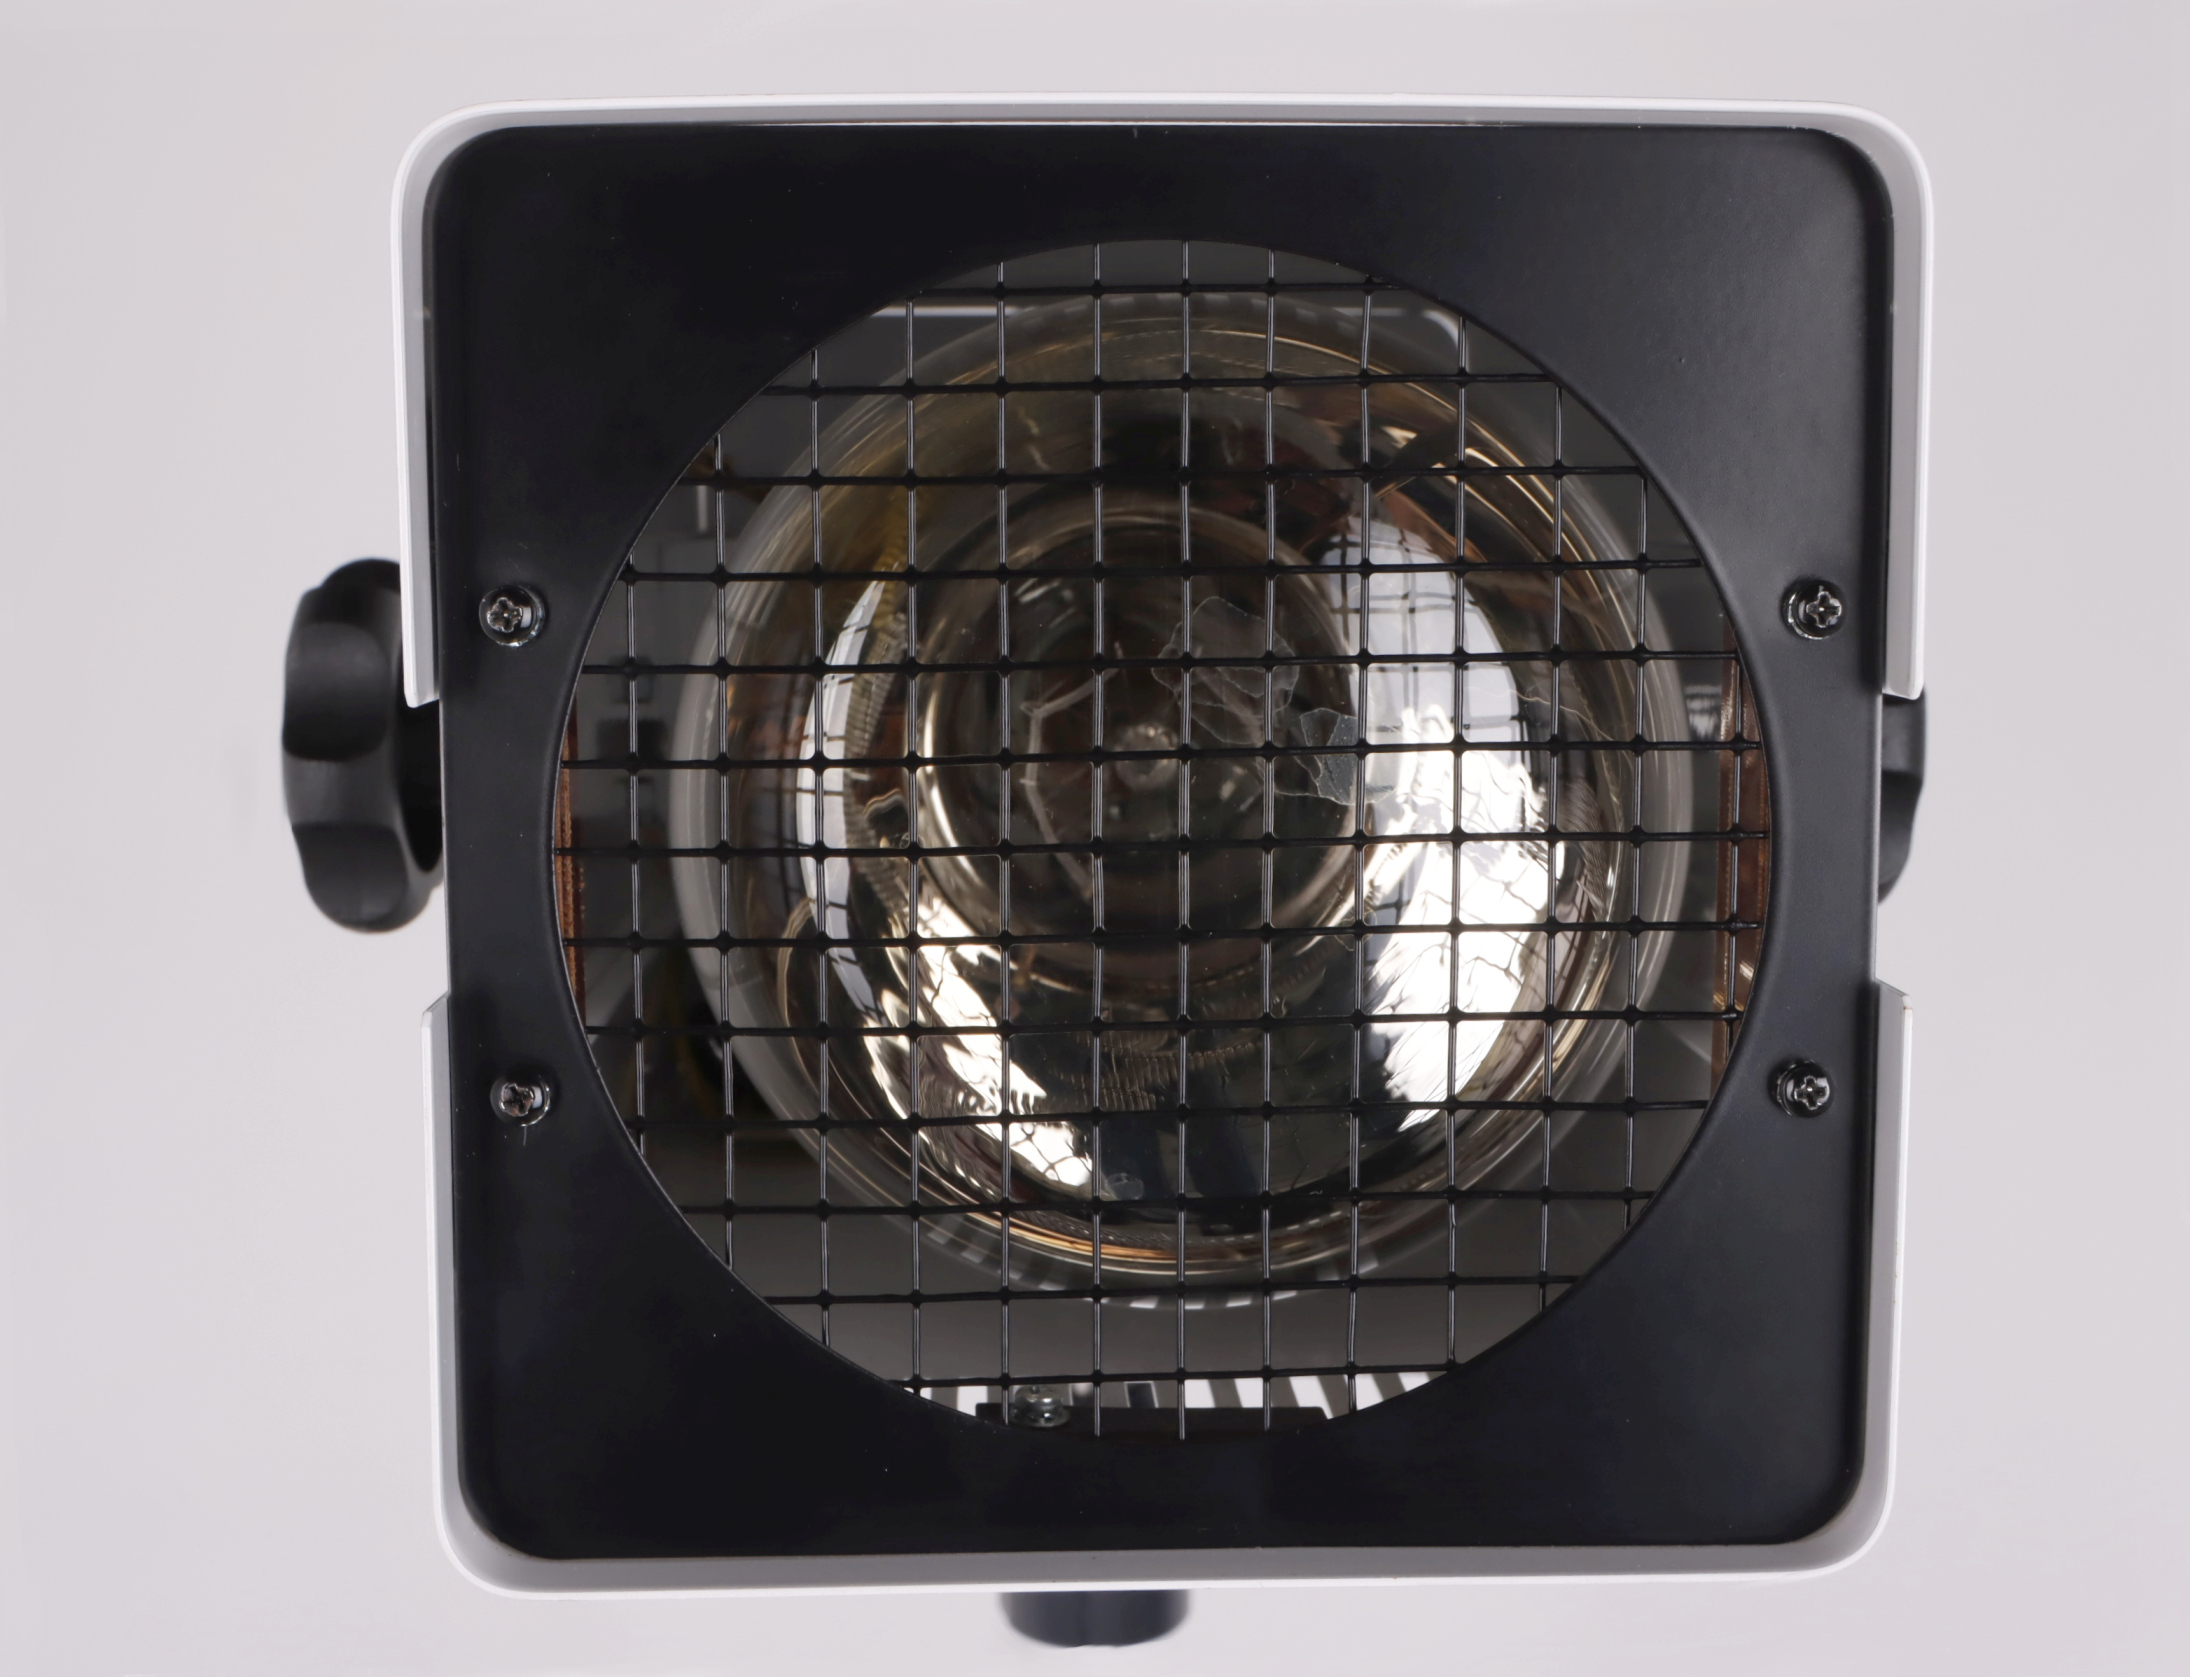 Lampy Sollux używane B/D PEM SOLUX LS - 1 - Praiston rekondycjonowane